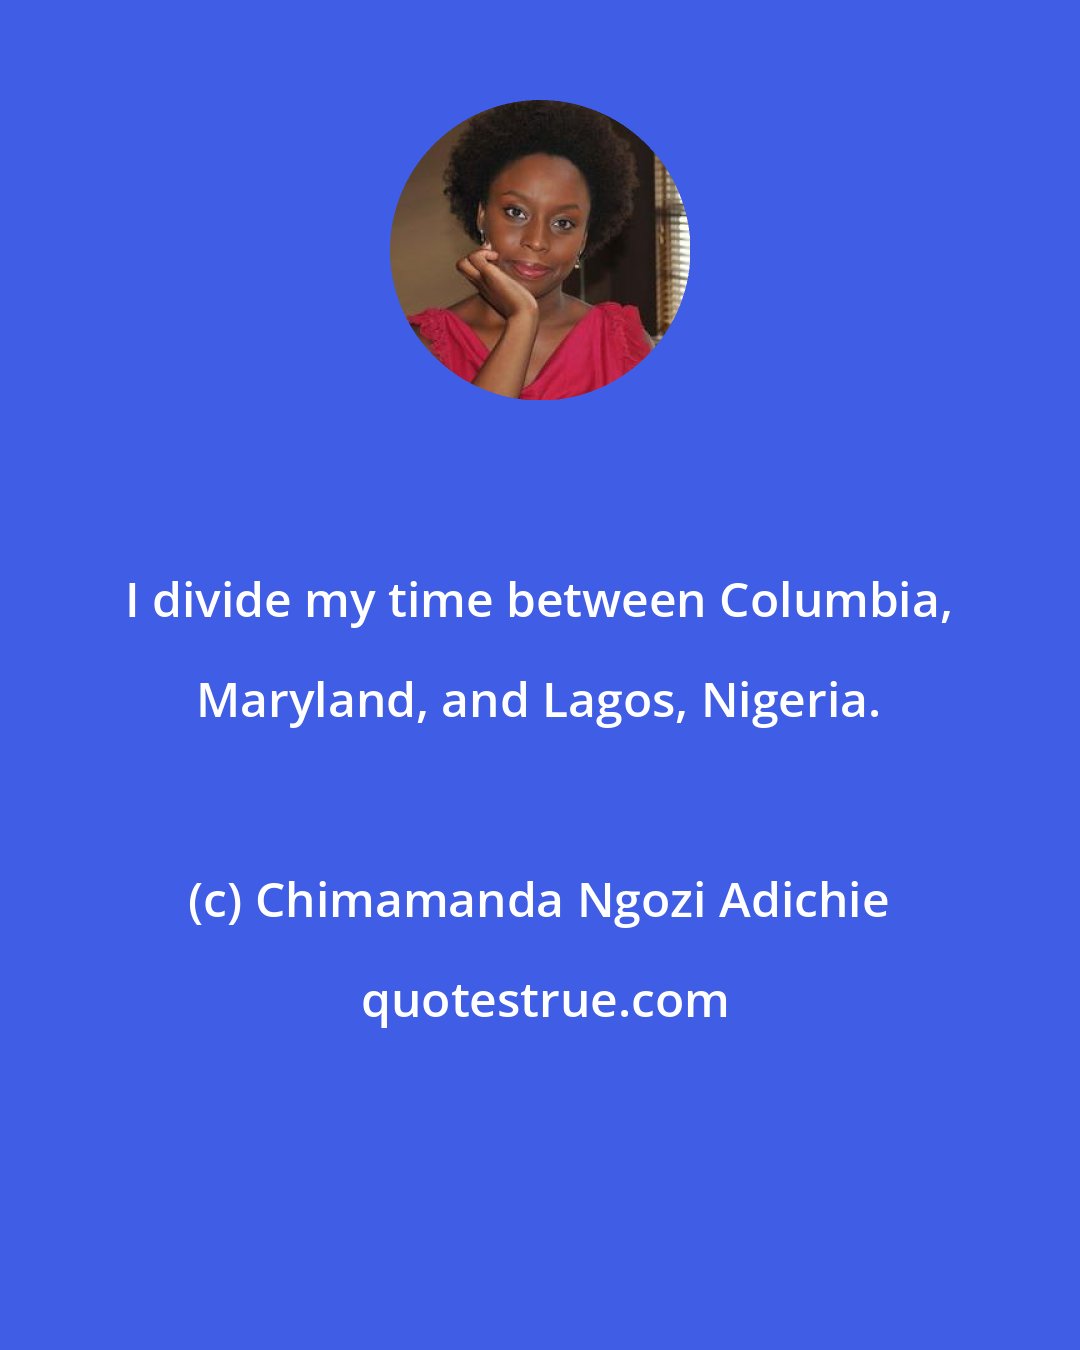 Chimamanda Ngozi Adichie: I divide my time between Columbia, Maryland, and Lagos, Nigeria.